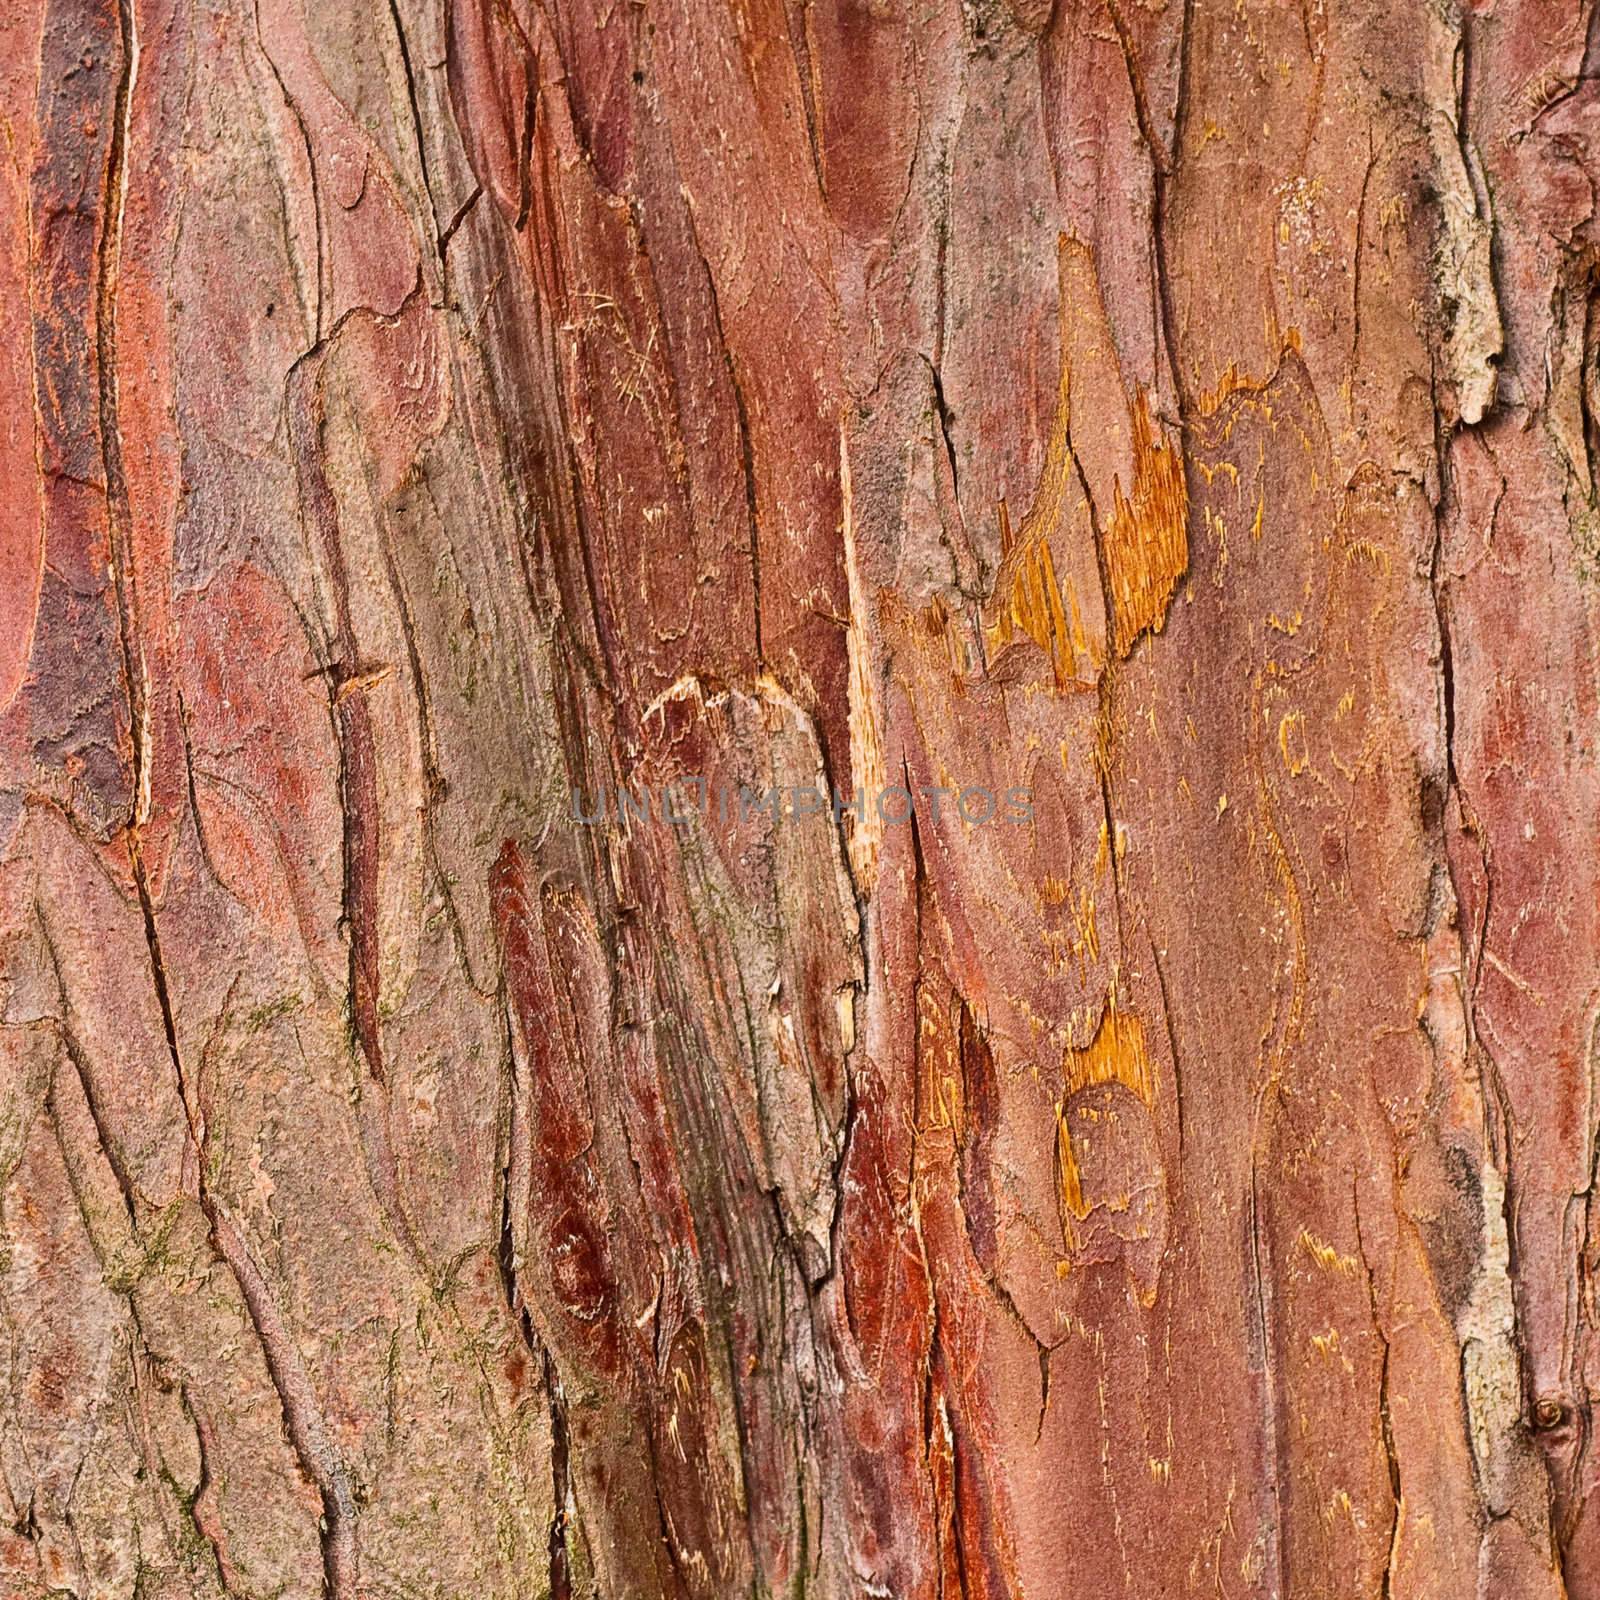 Lovely detailed background image of tree bark